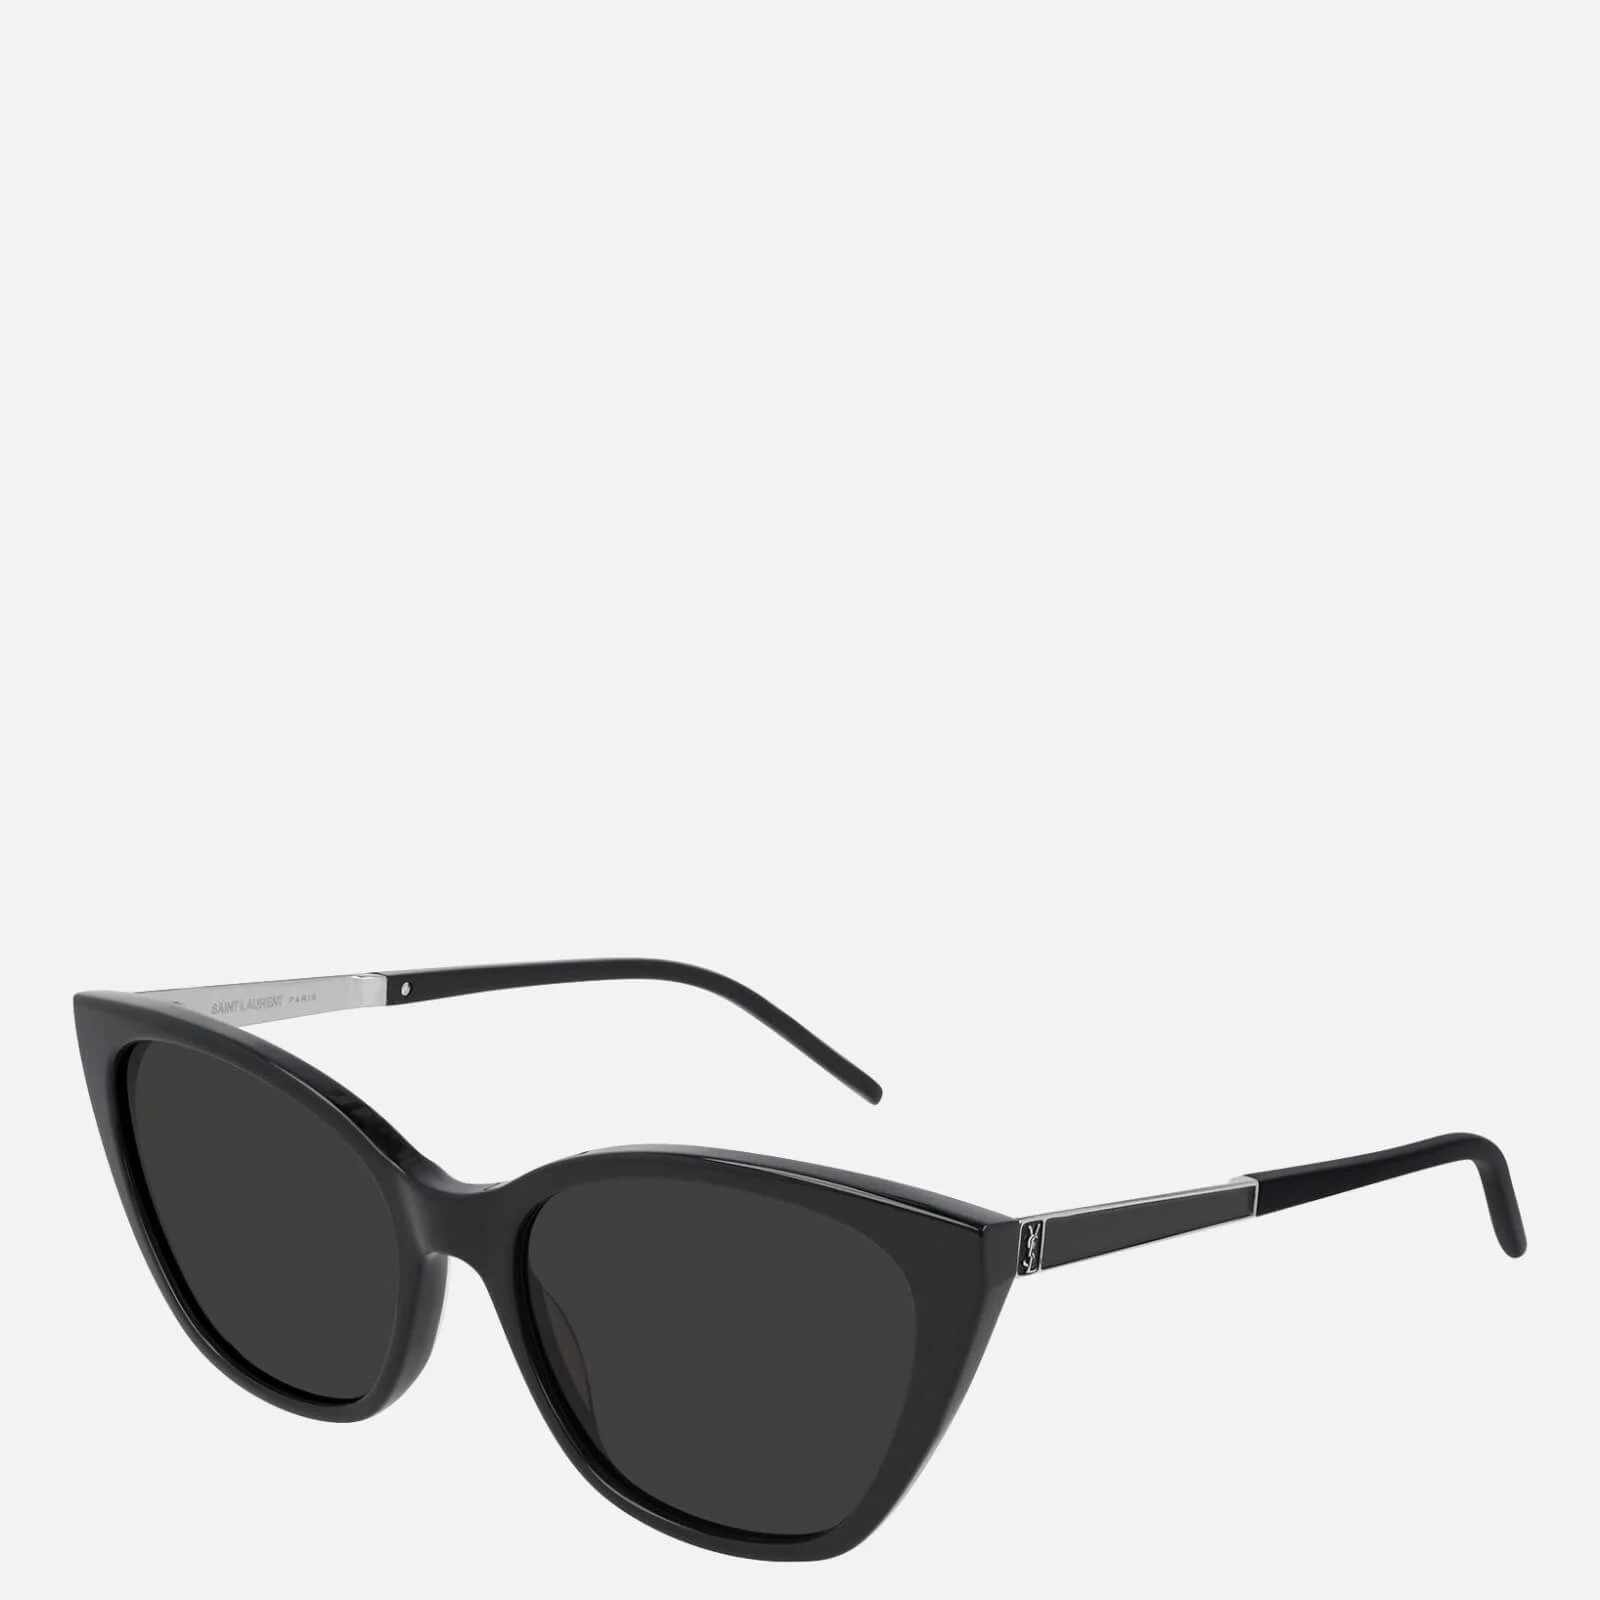 Saint Laurent Women's Cat Eye Sunglasses - Black/Silver Image 1